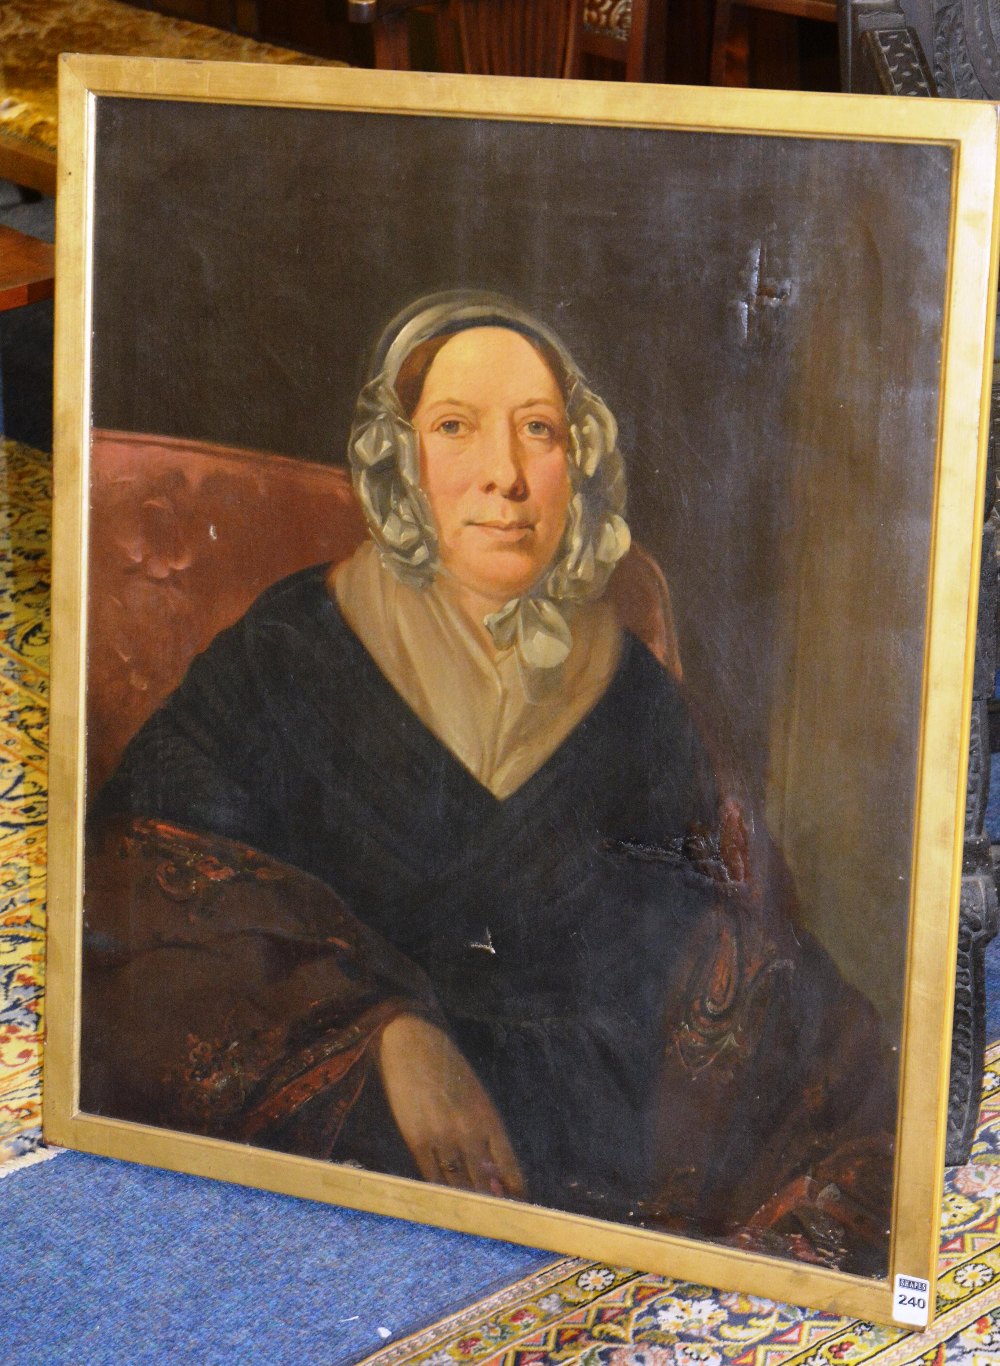 English School (c.1850)
'Portrait of a Seated Lady'
Oil on canvas, 76 x 63cm